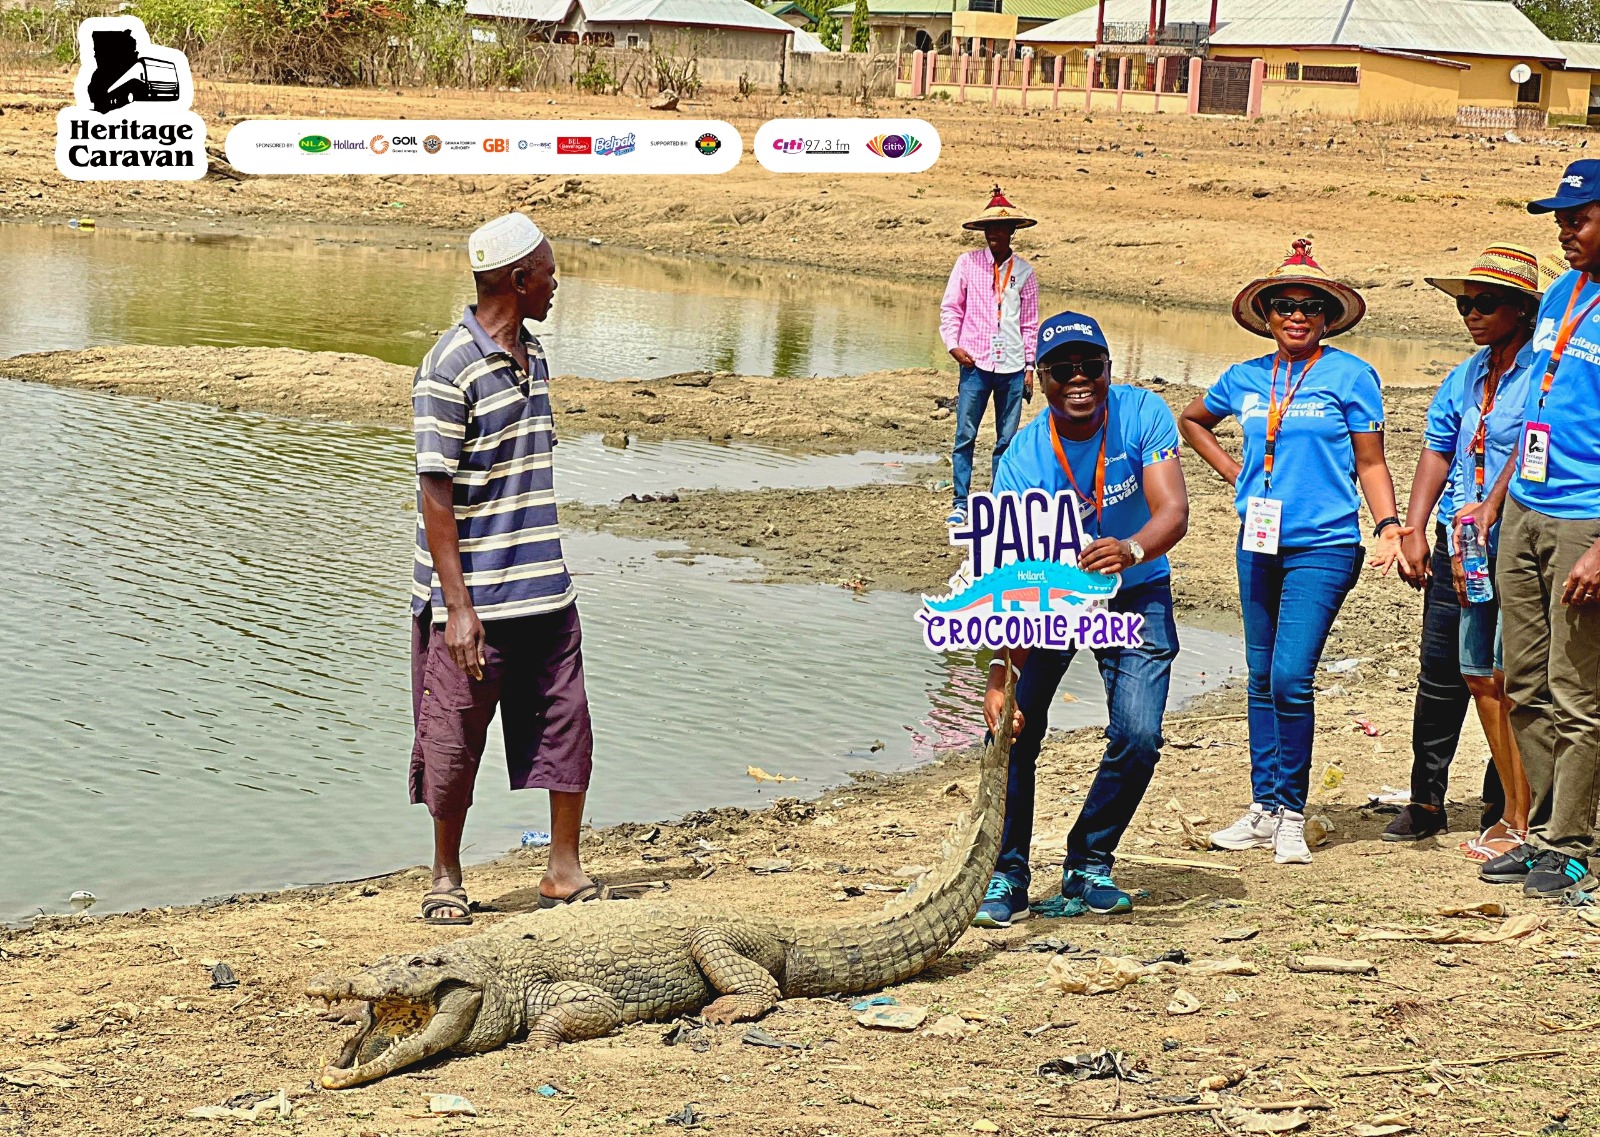 Heritage Caravan Day 5: ‘Caravanites explore sacred Paga Crocodile Pond